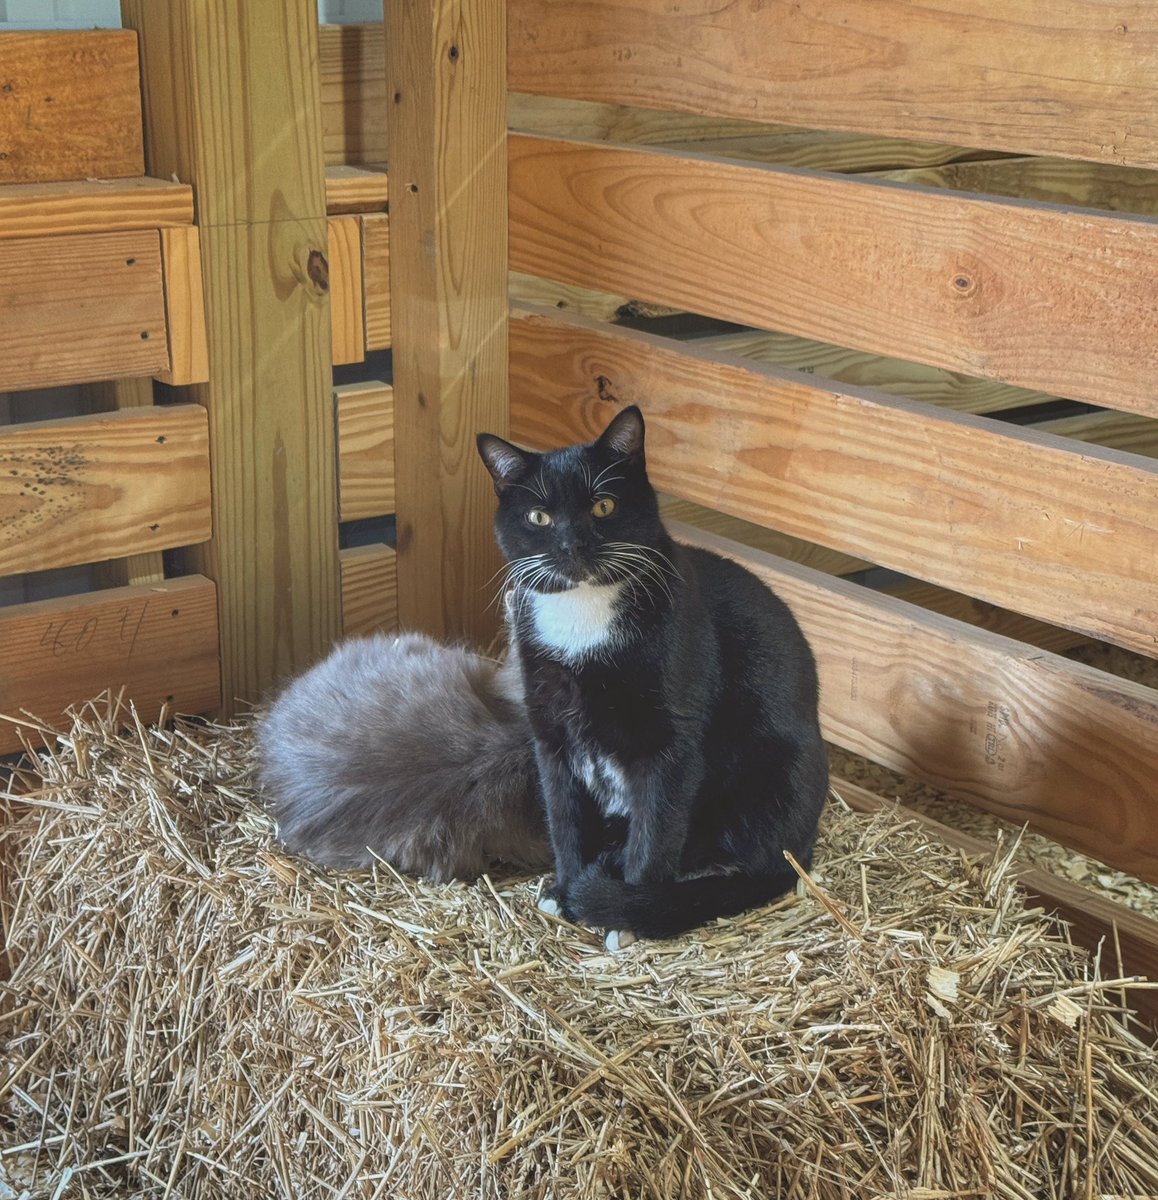 The barn watchers 
#farmcats #barncats #barncat #farmcat